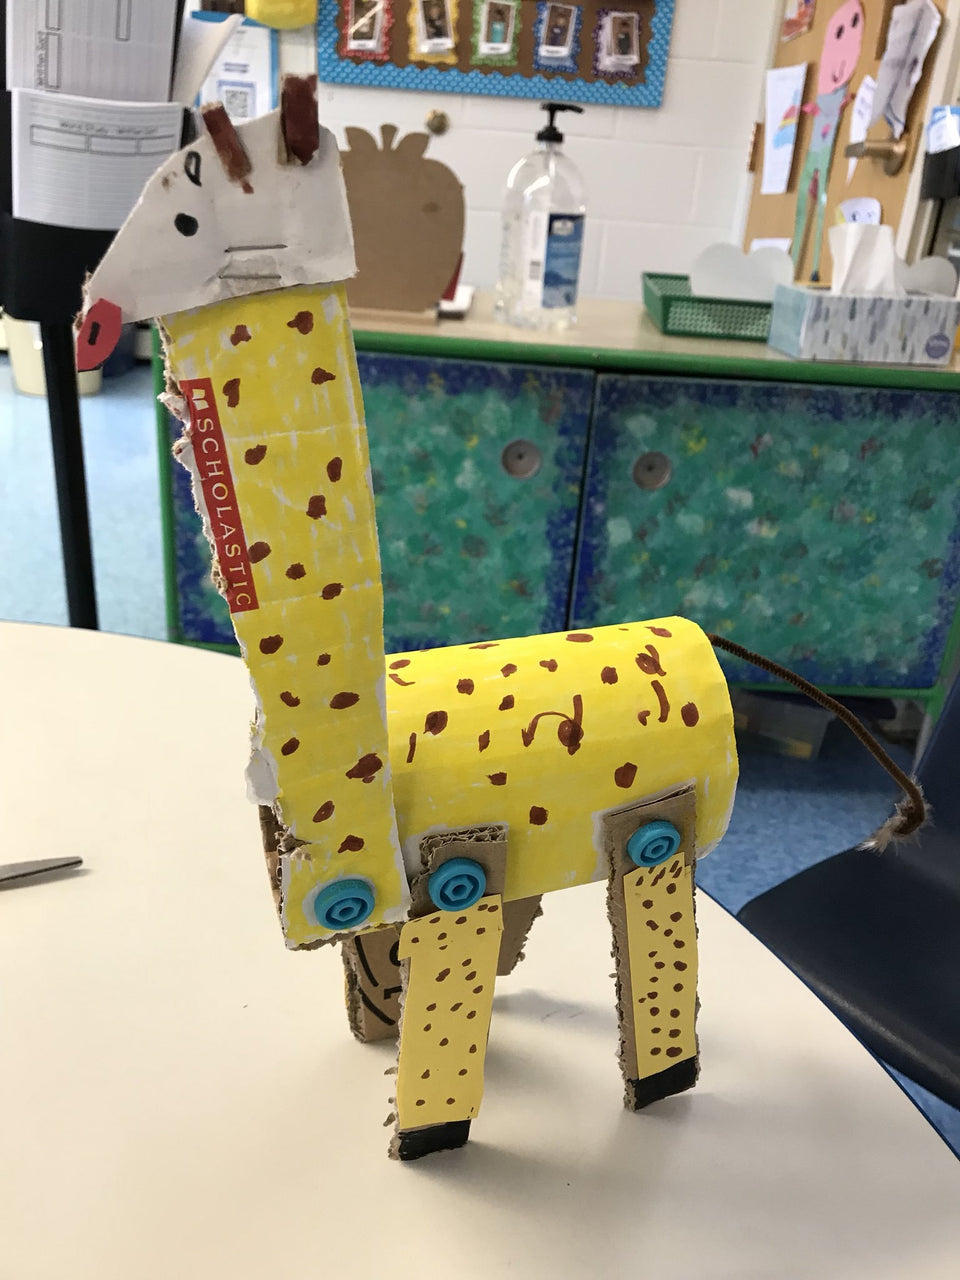 Cardboard giraffe made with Makedo construction system